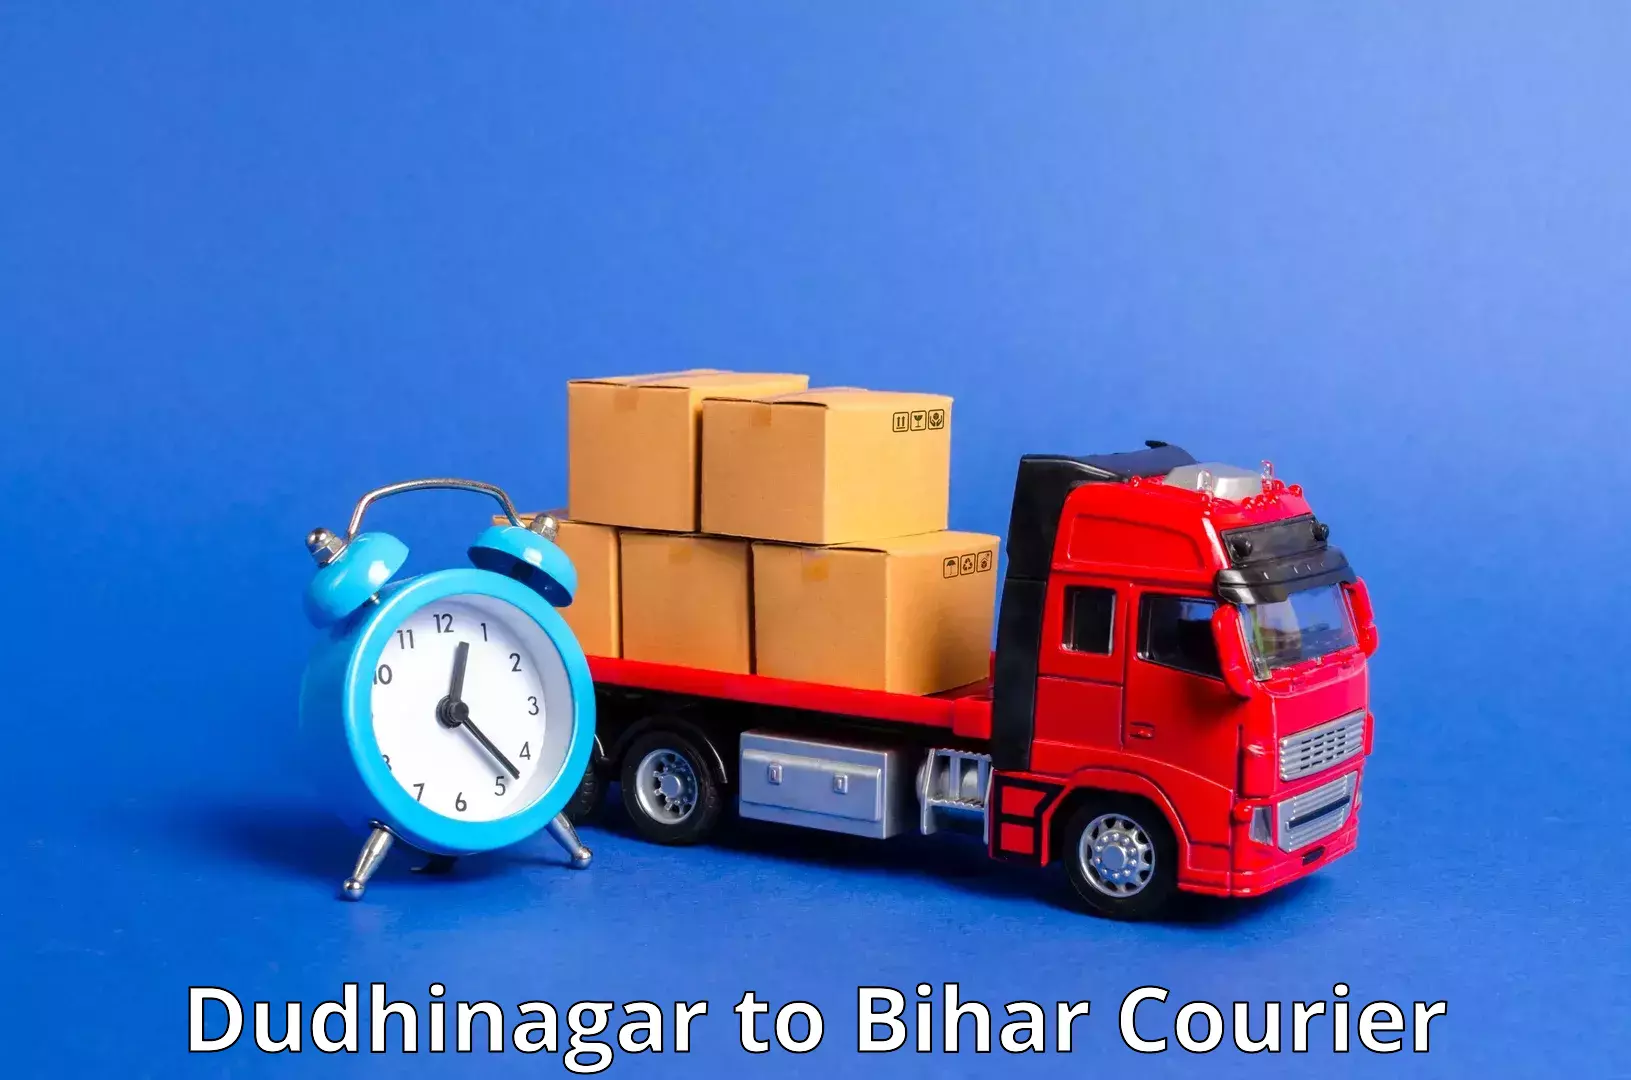 Courier service innovation Dudhinagar to Dhaka